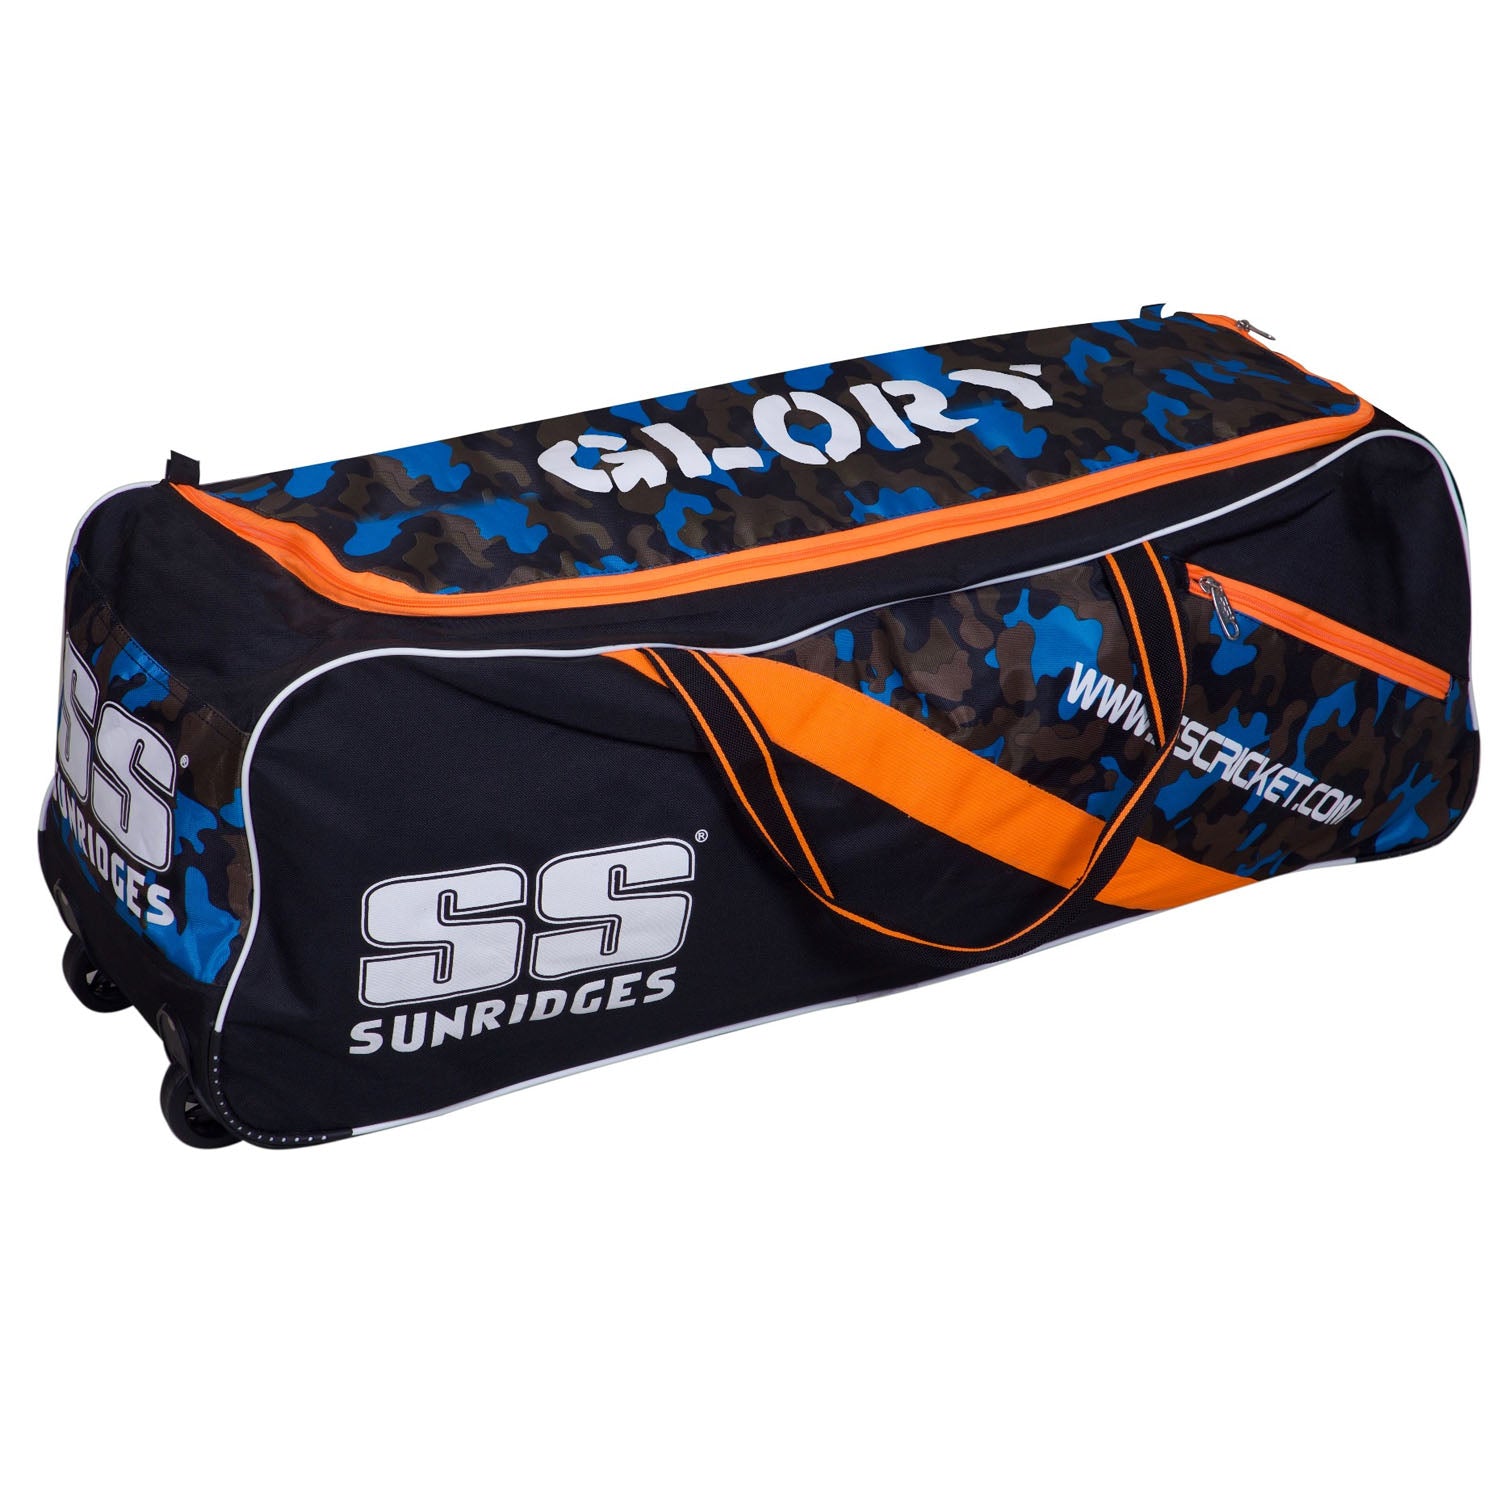 SS Glory Double Wheel Cricket Kitbag - Best Price online Prokicksports.com